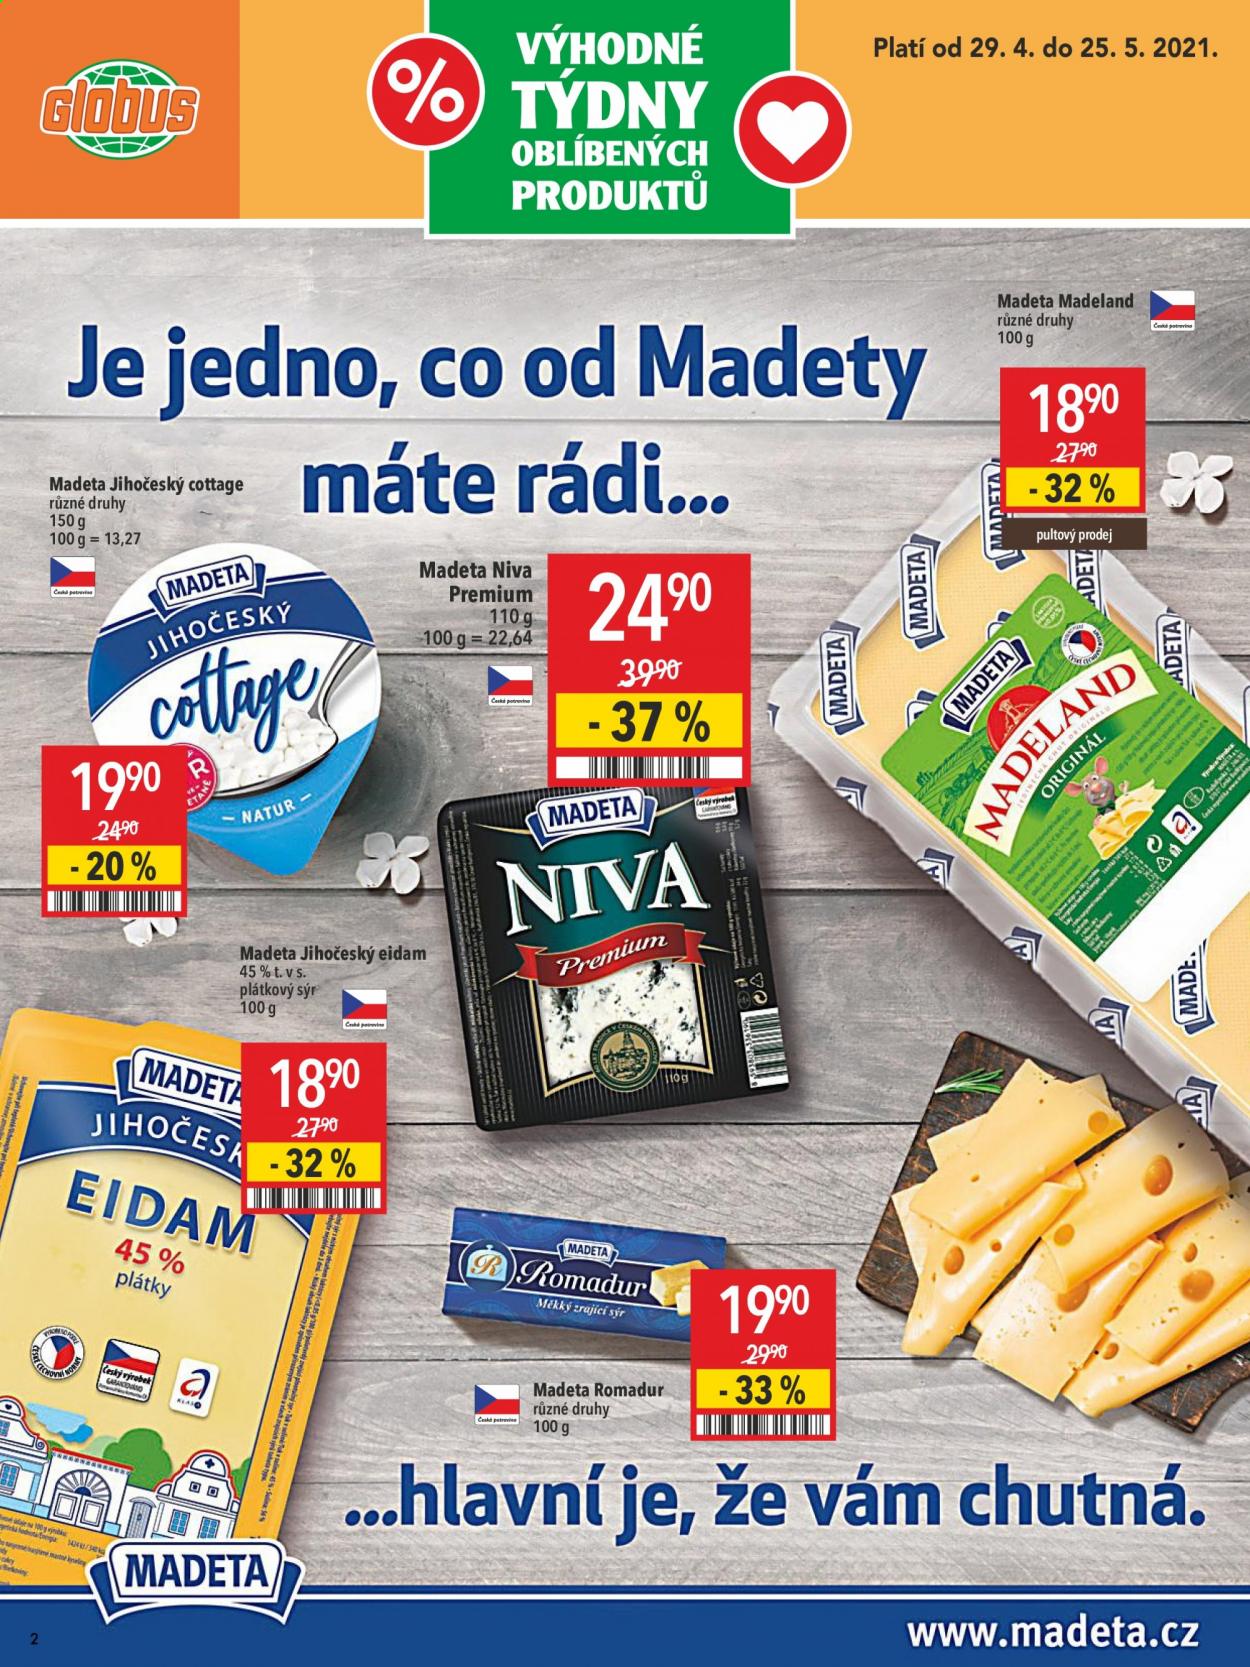 thumbnail - Leták Globus - 29.4.2021 - 25.5.2021 - Produkty v akci - niva, Madeland, Romadur, cottage, eidam, Madeta, plátkový sýr, sýr. Strana 2.